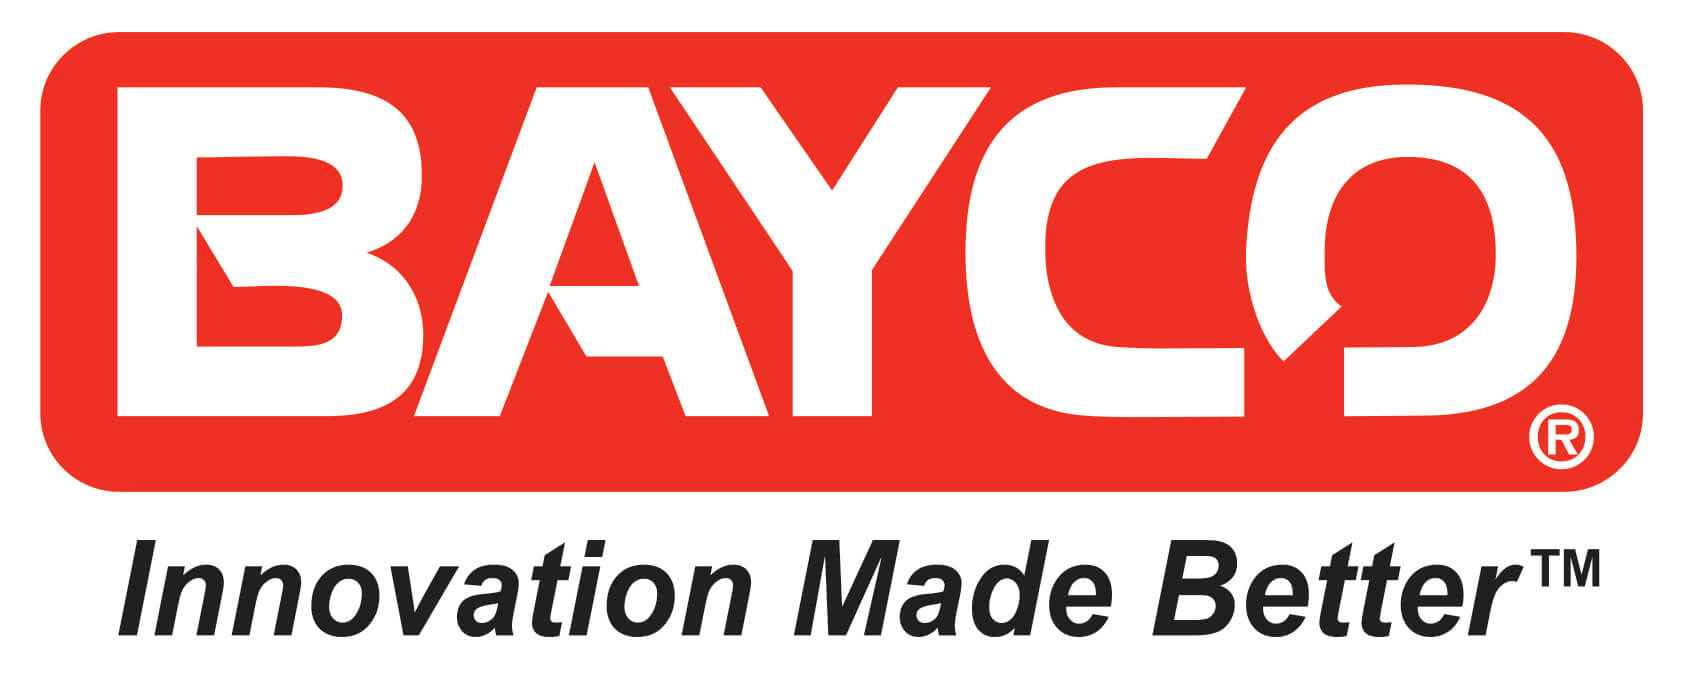 Bayco Products, Inc.